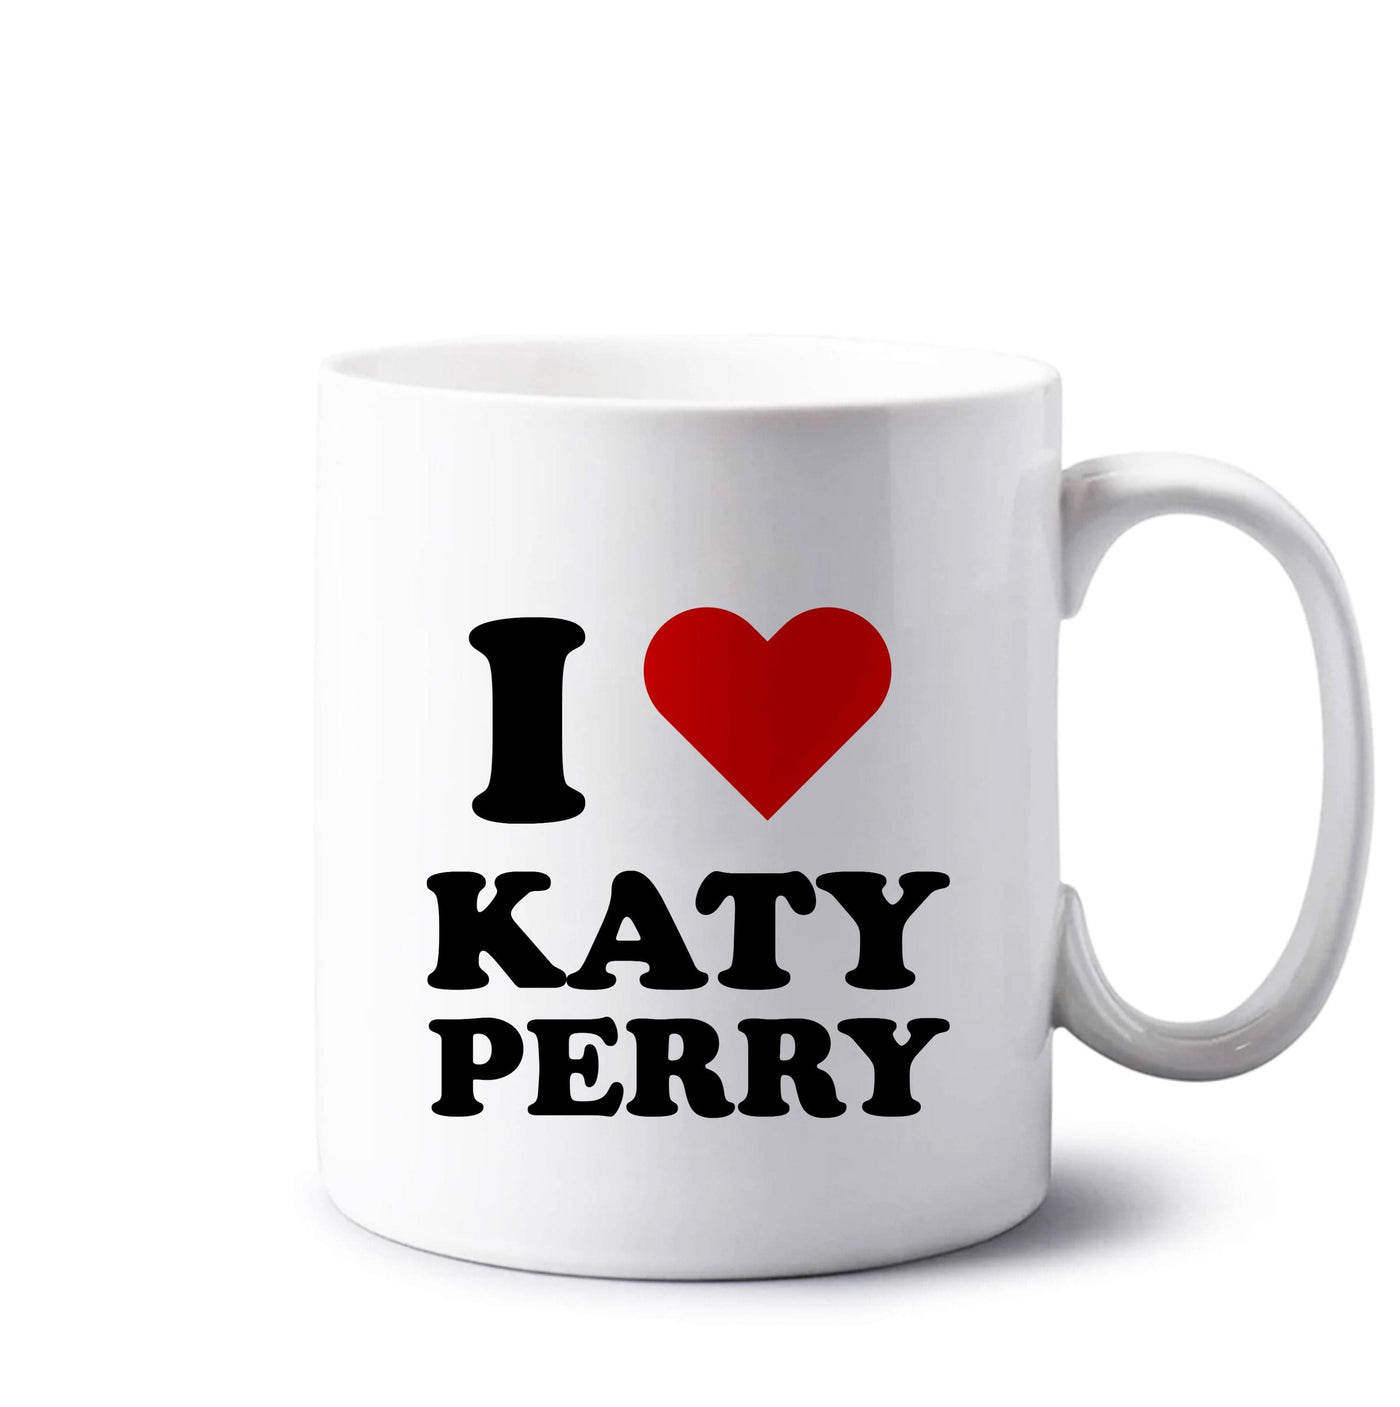 I Love Katy Perry Mug